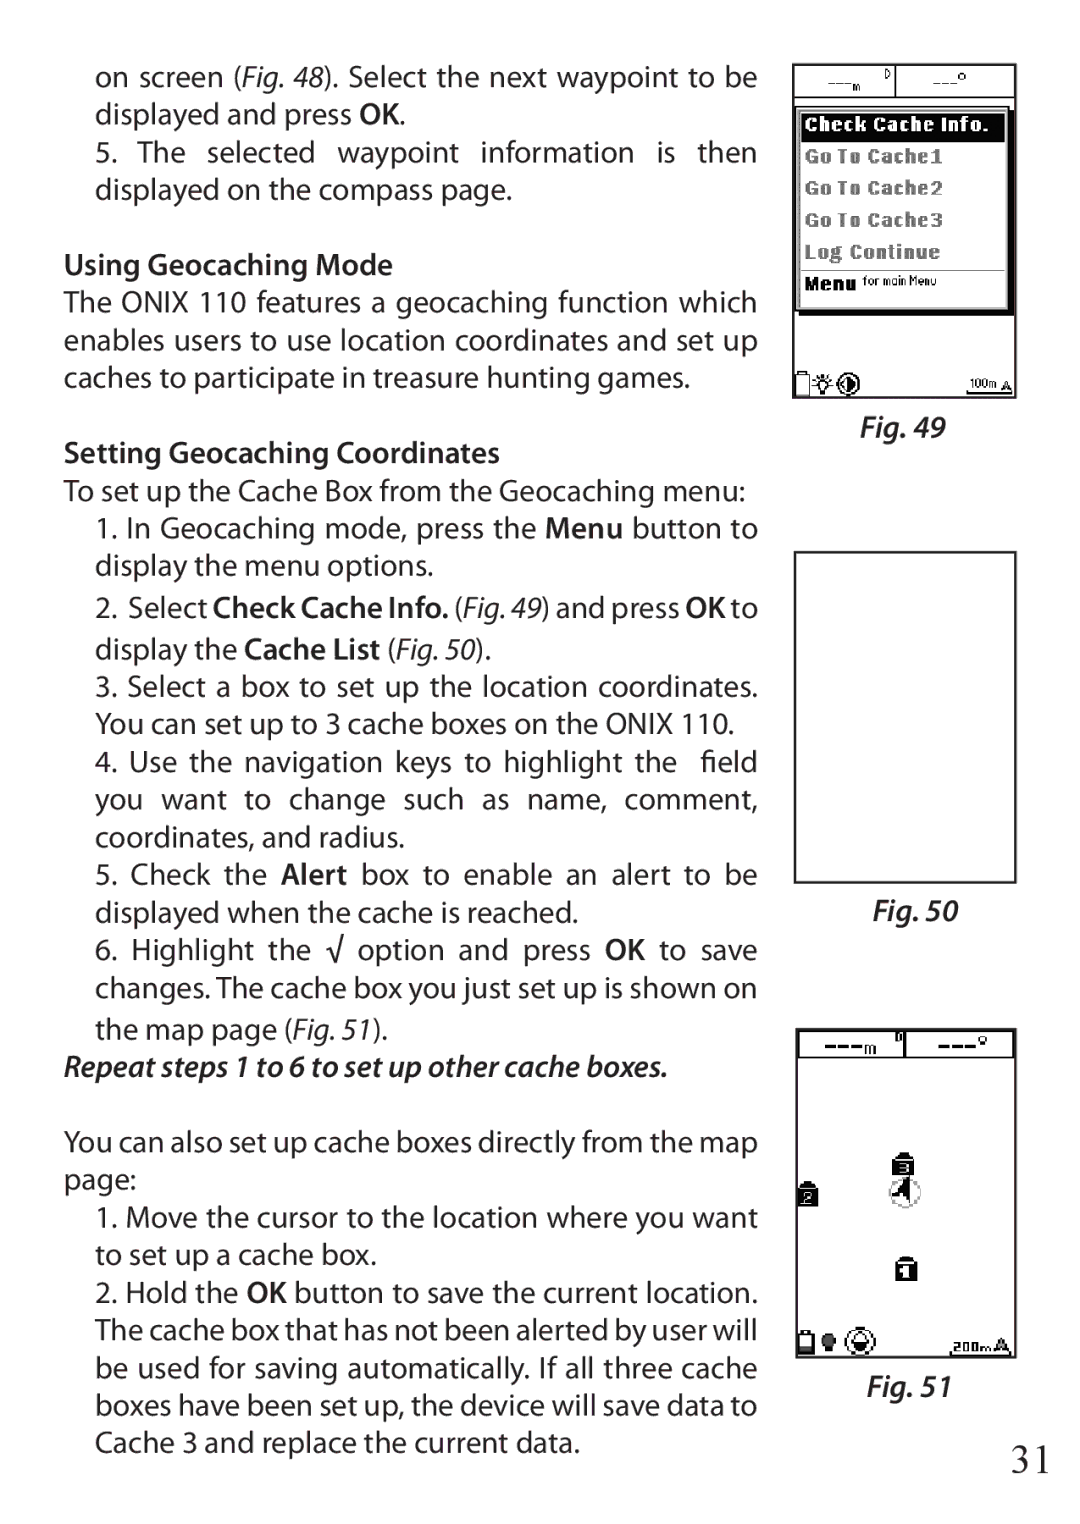 Bushnell 110 instruction manual Using Geocaching Mode, Setting Geocaching Coordinates 